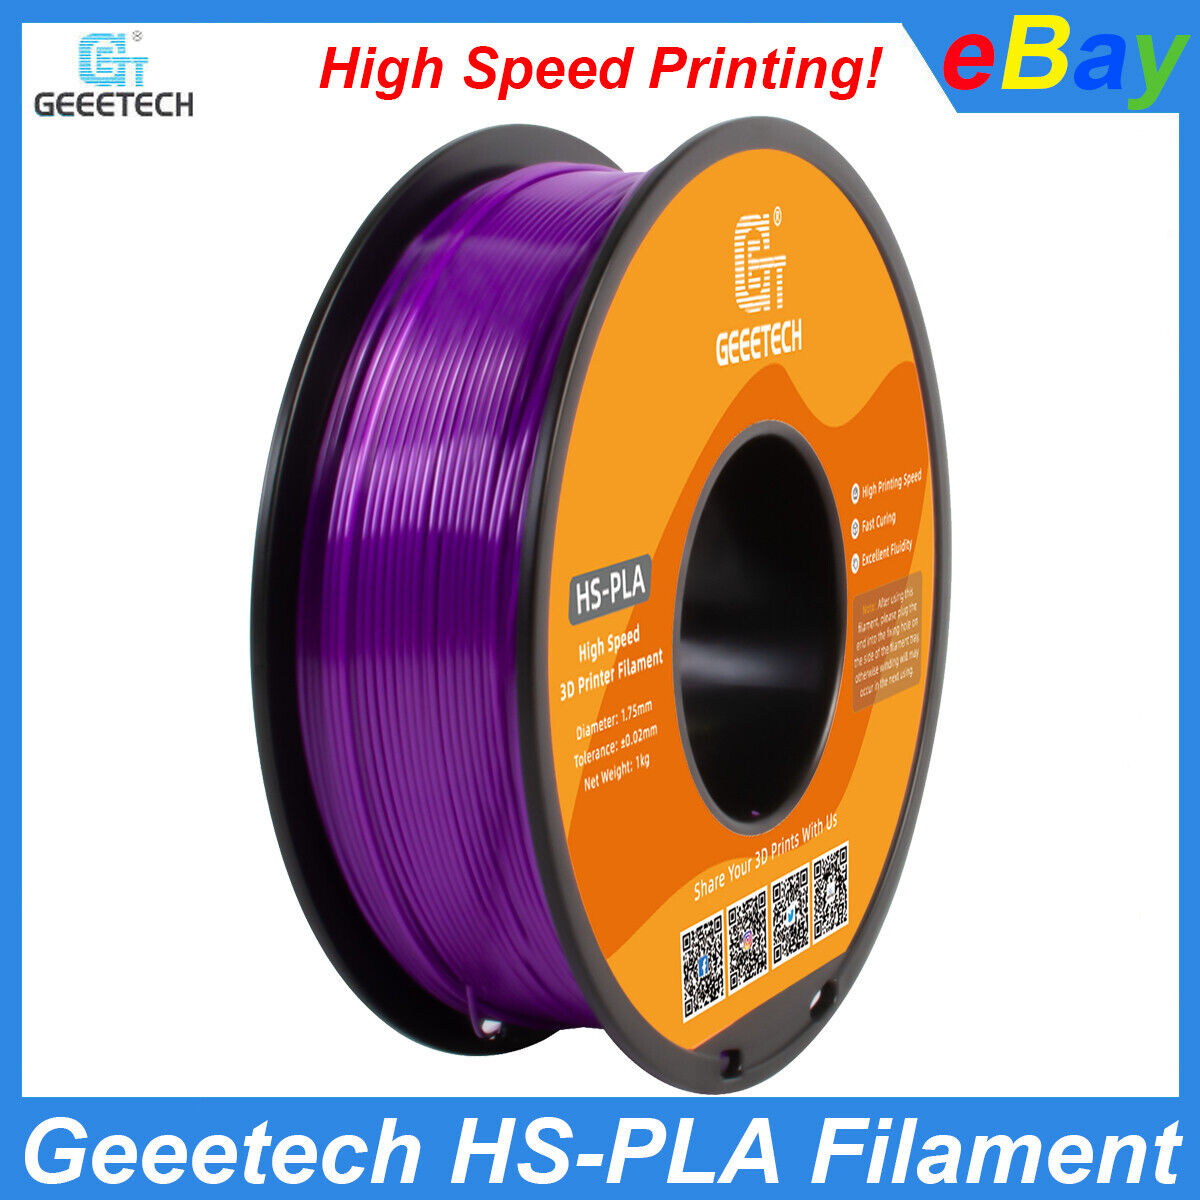 Geeetech HS-PLA Filament 1.75mm 1kg Gray Fast Printing For FDM 3D Printer